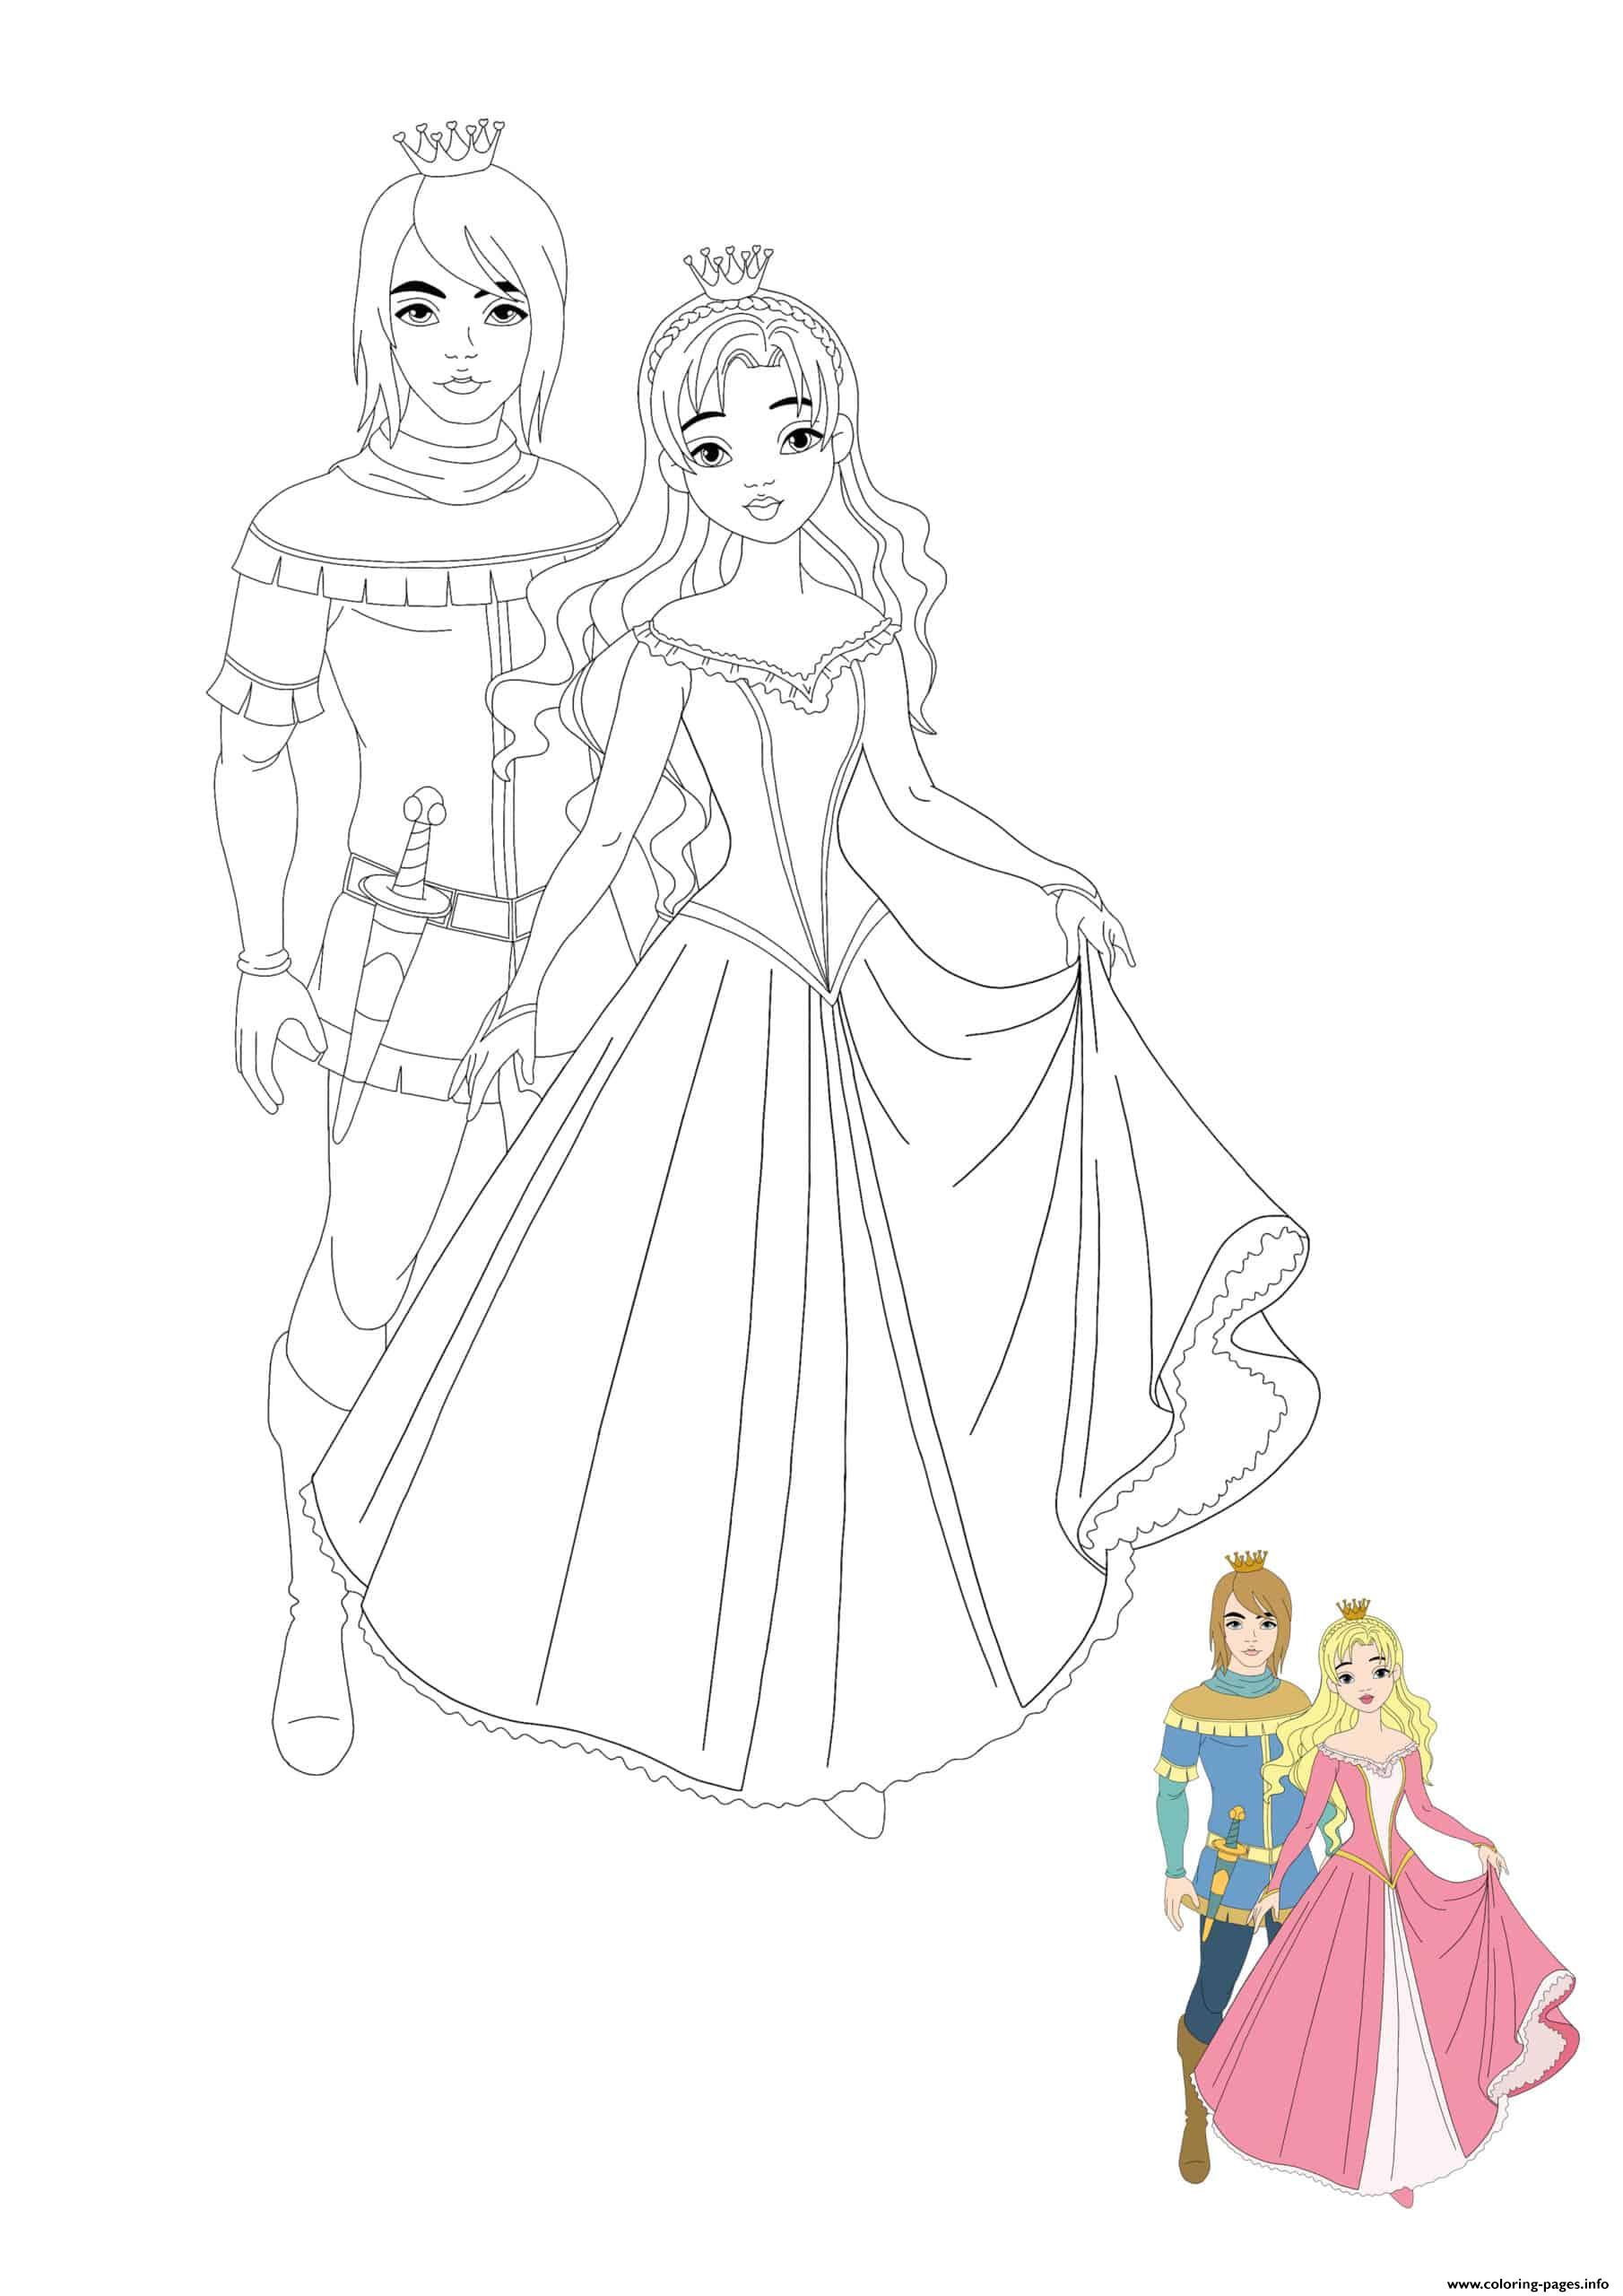 Prince And Princess coloring